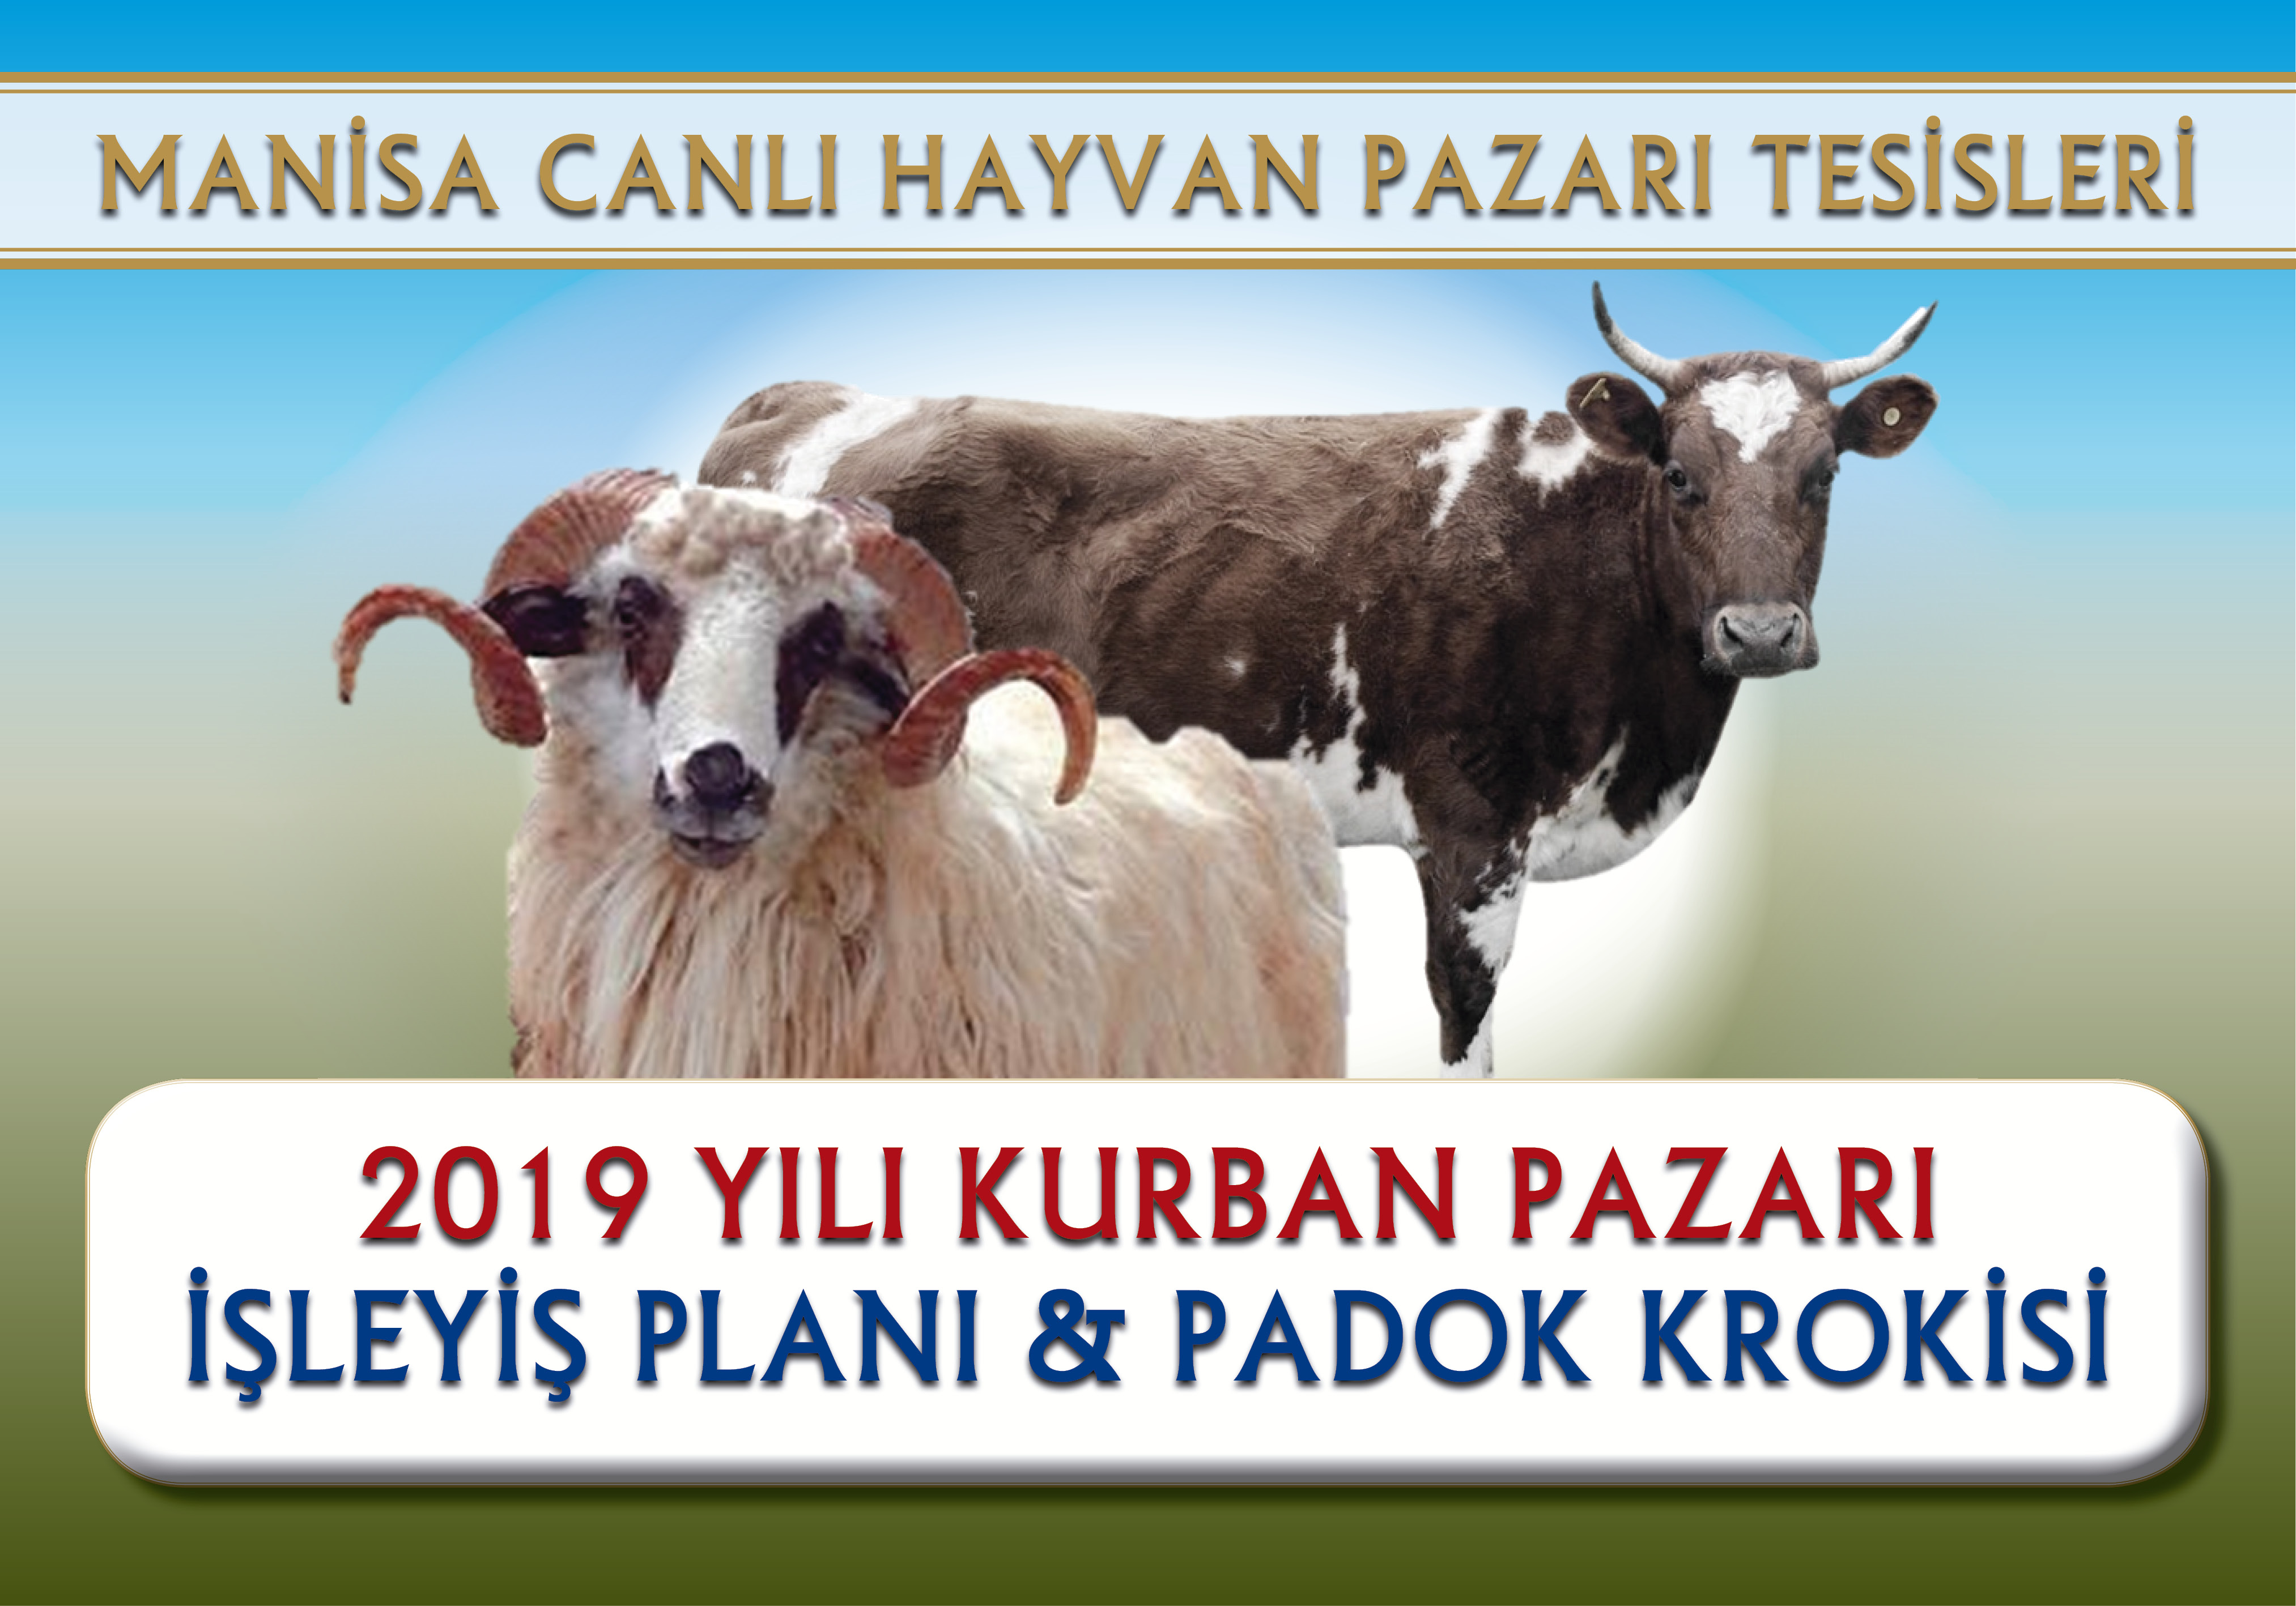 2019 YILI KURBAN PAZARI LEY PLANI & PADOK KROKS